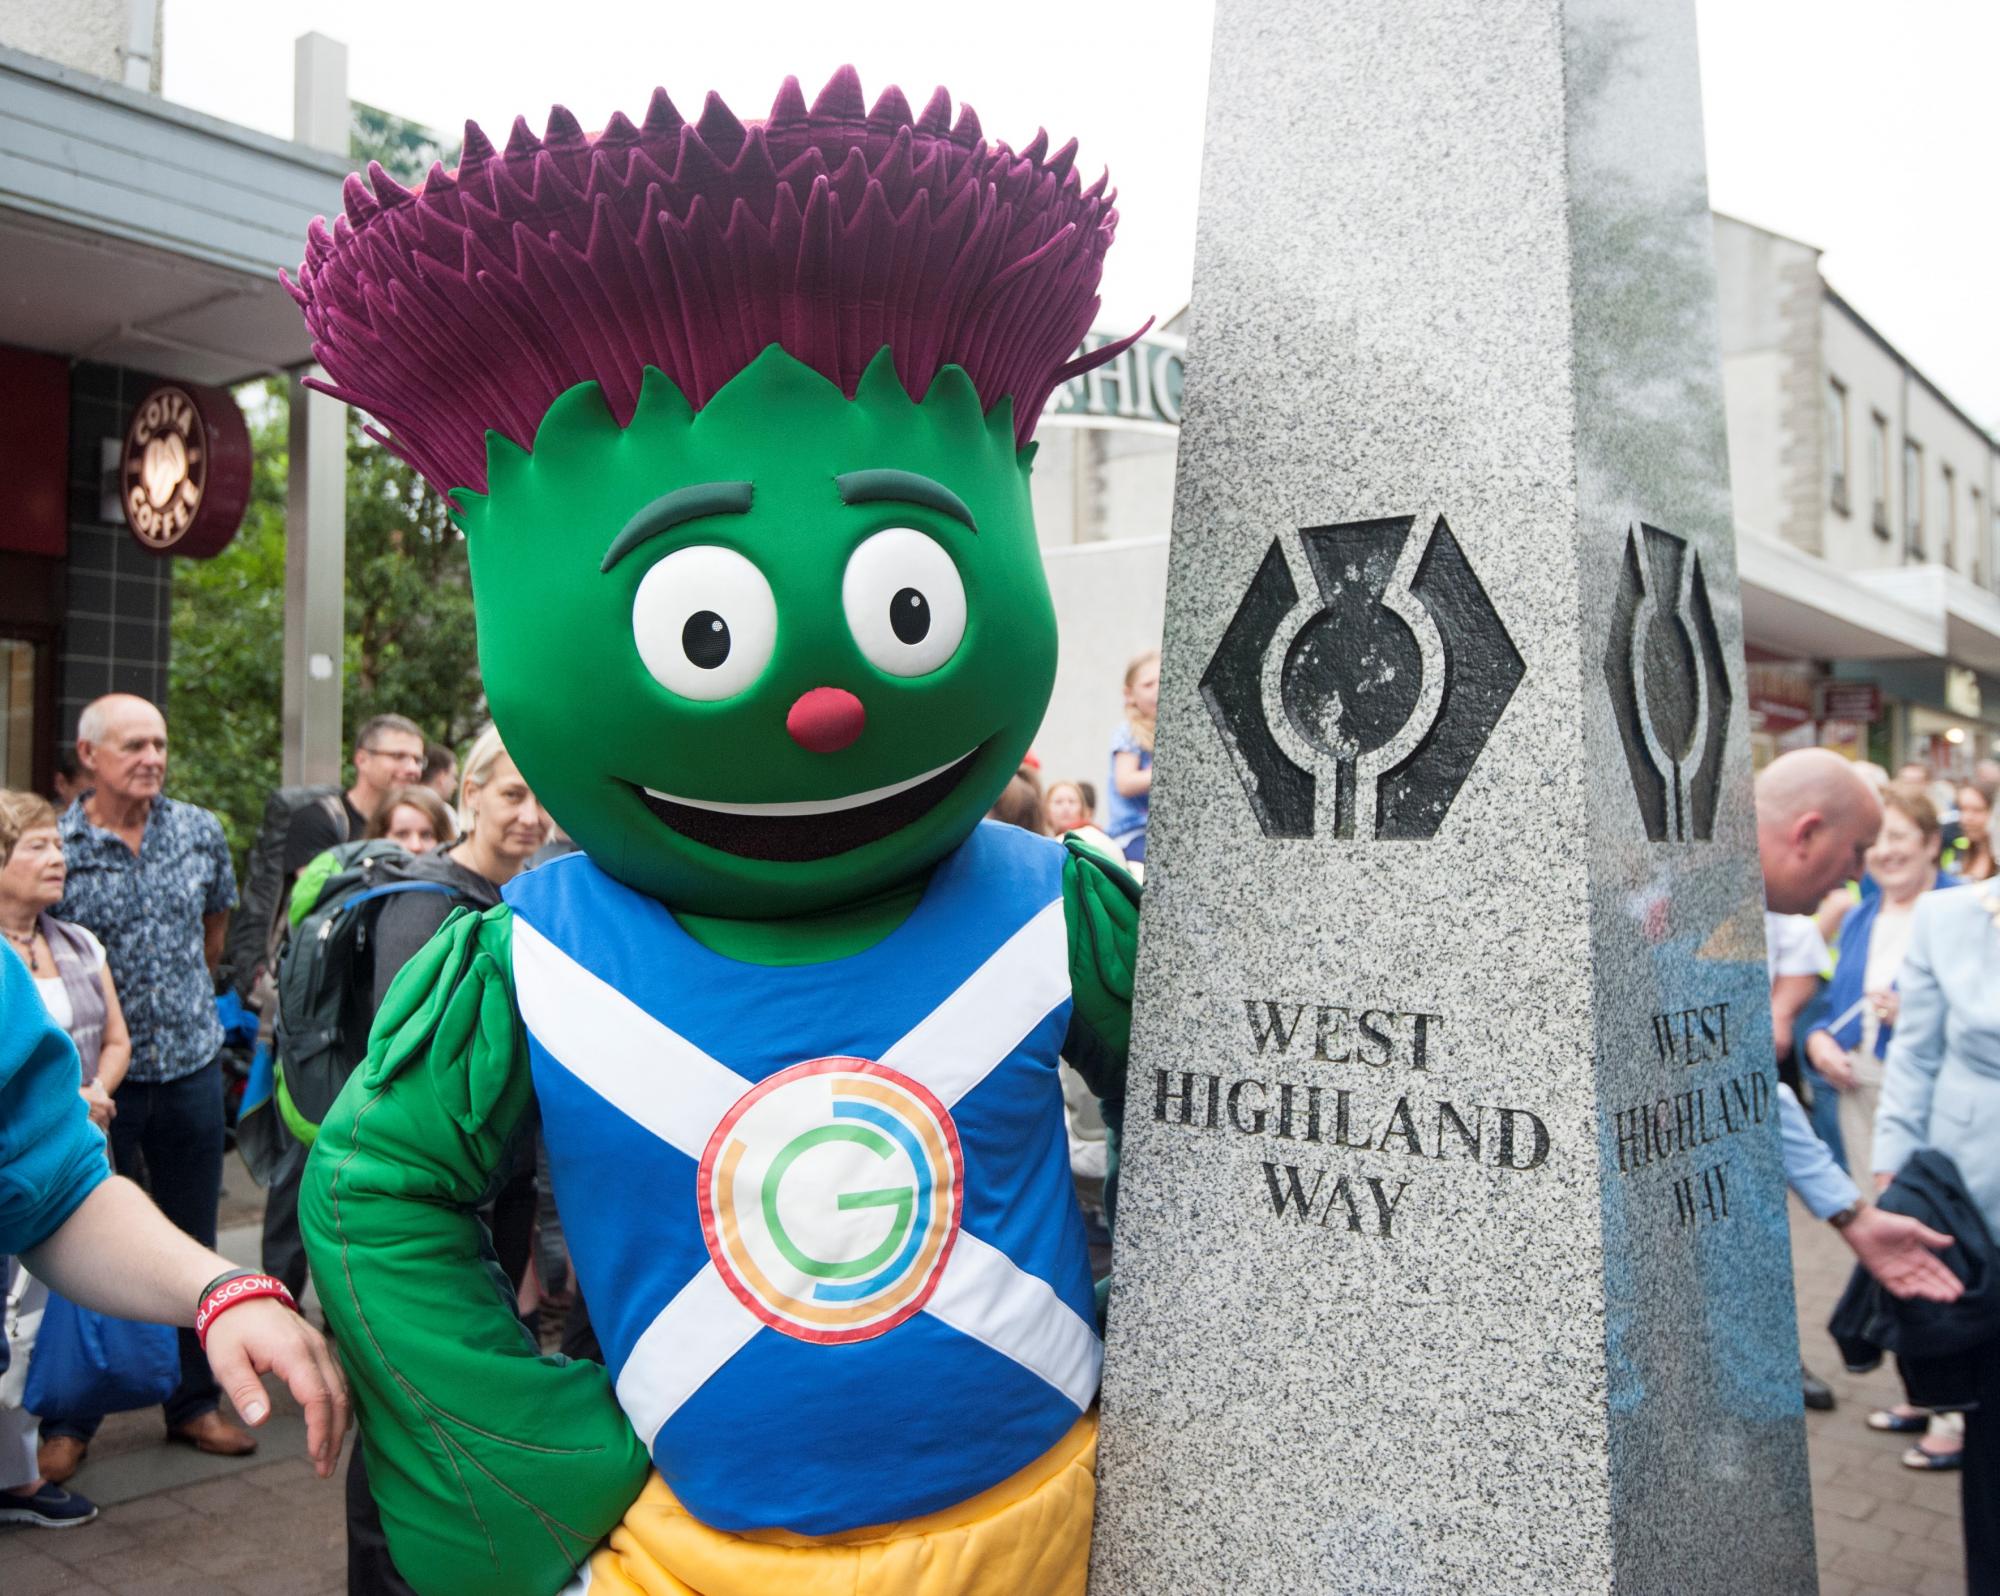 West Highland Way - 2014 mascot Clyde